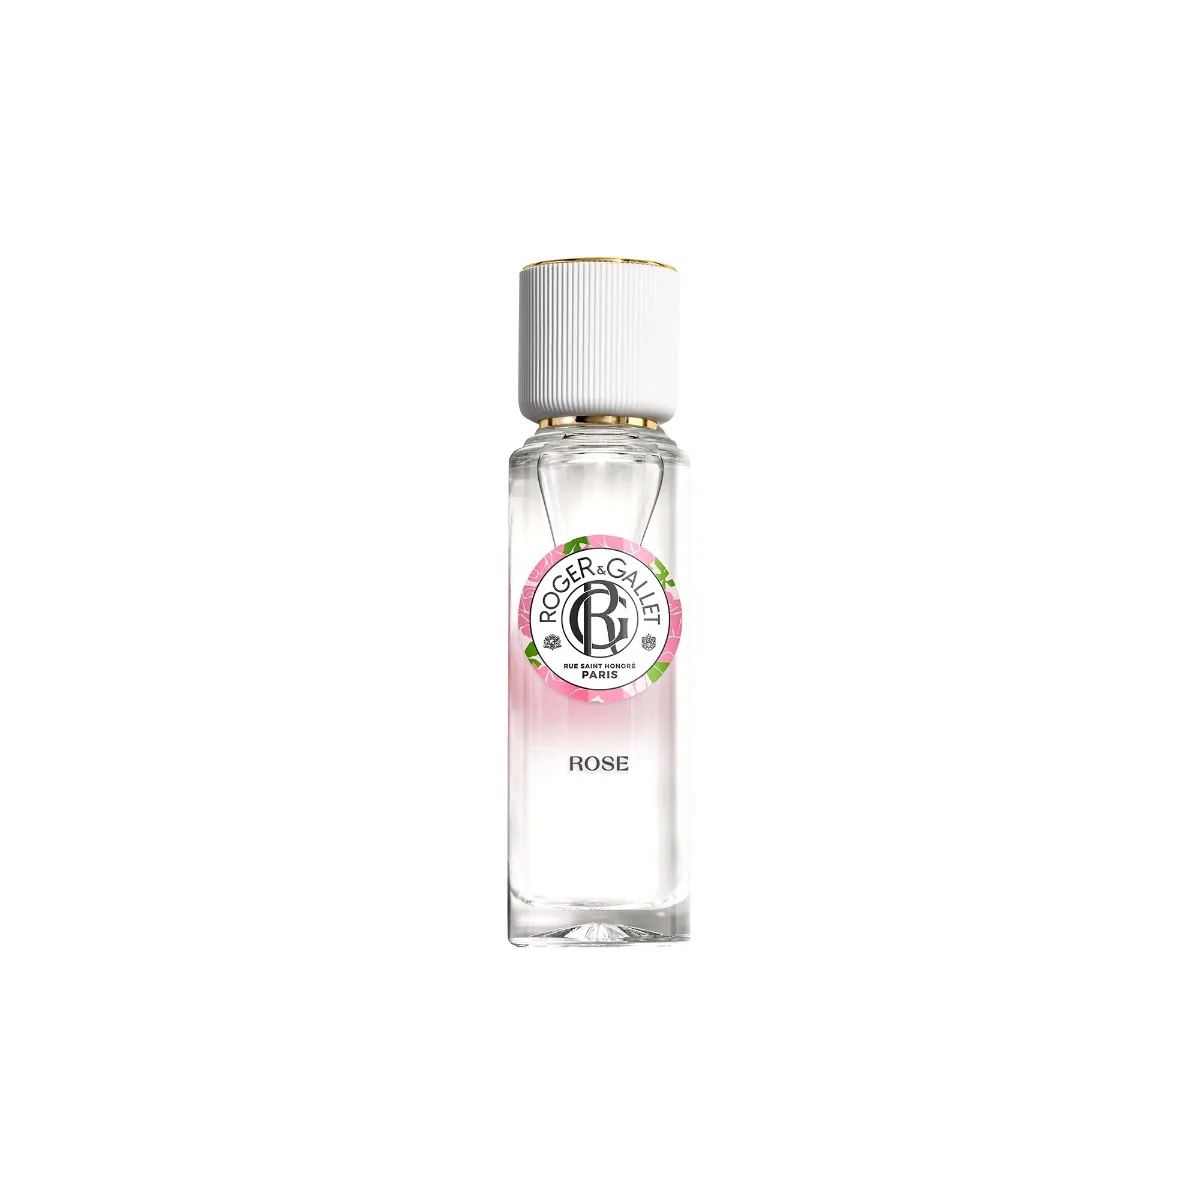 R&G Rose Eau Parfumée 30 ml Acqua profumata